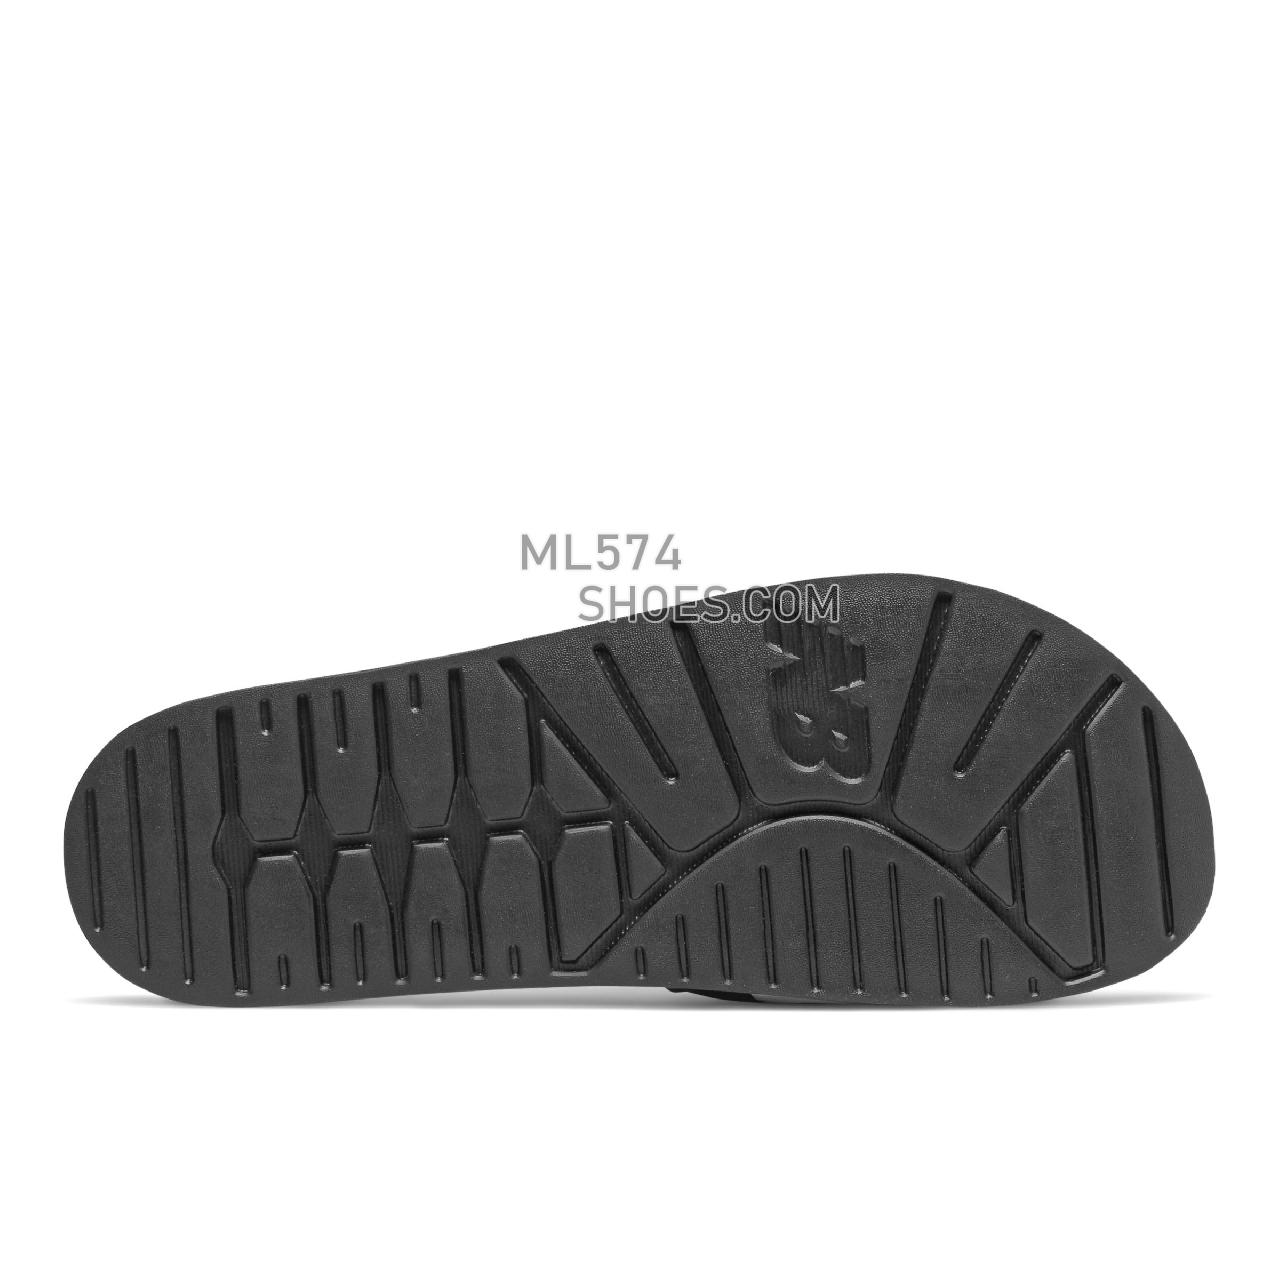 New Balance 200 - Men's Sandals - Black with White - SMF200BK